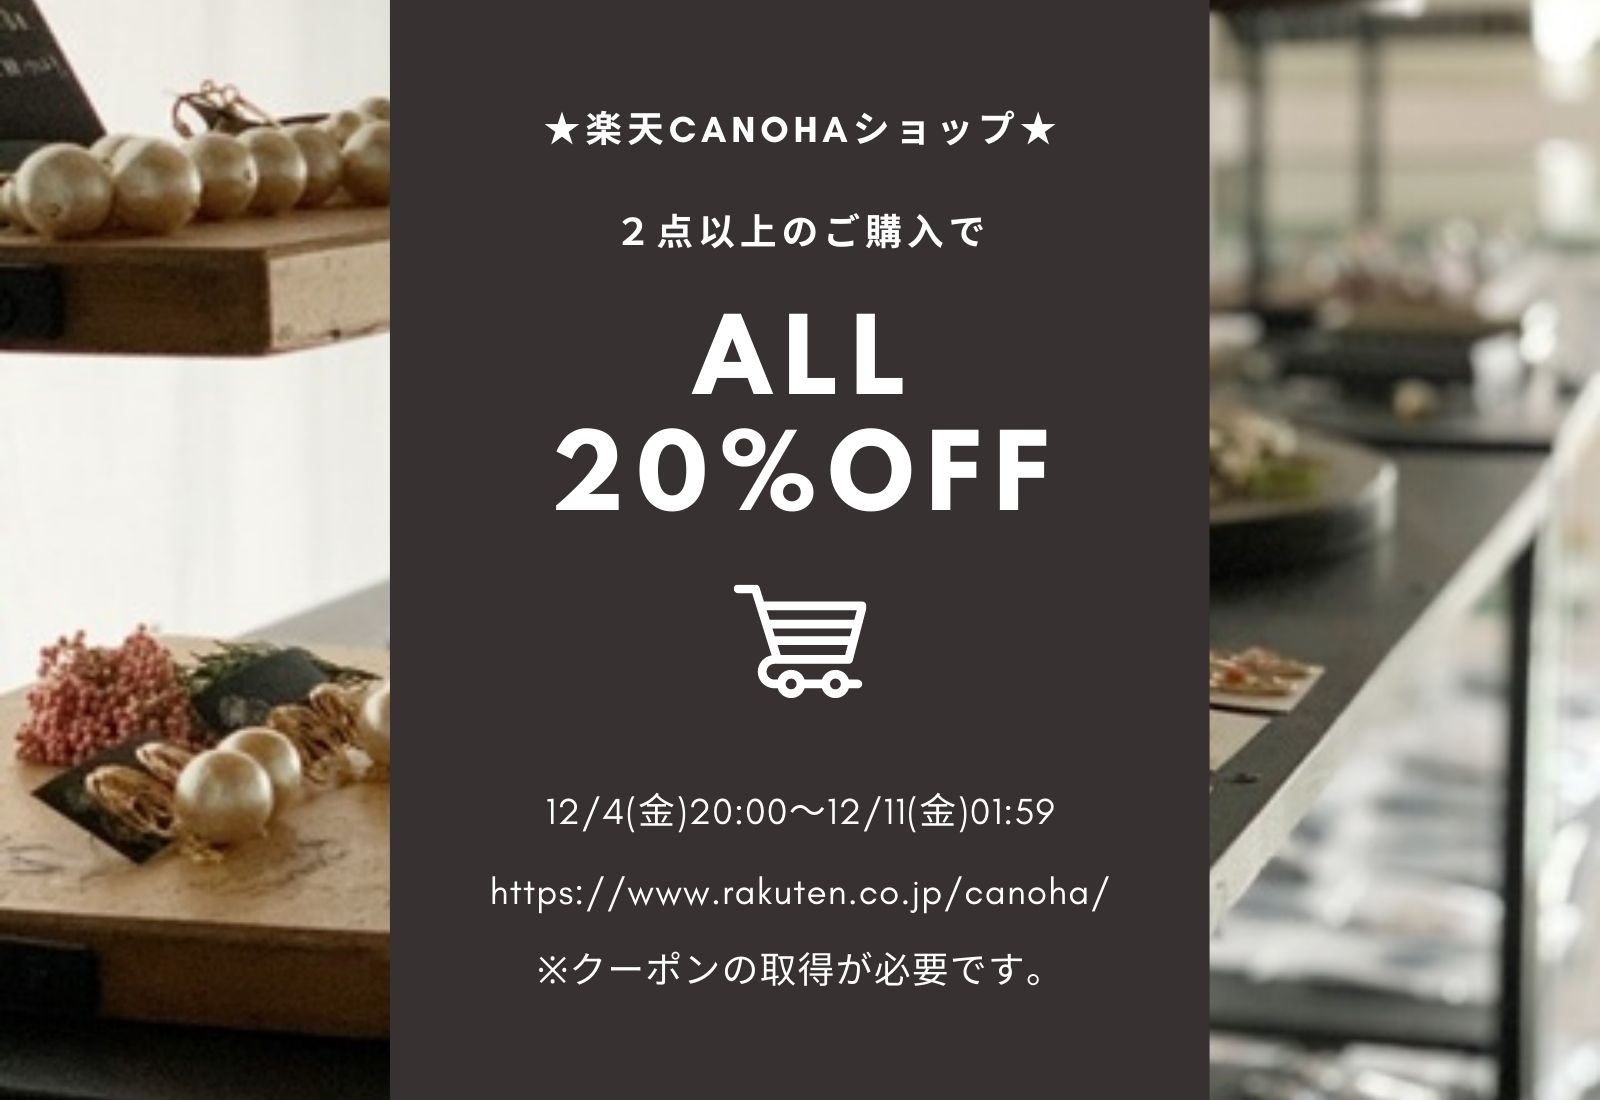 Buy 2 more, 20% discount on Rakuten canoha.